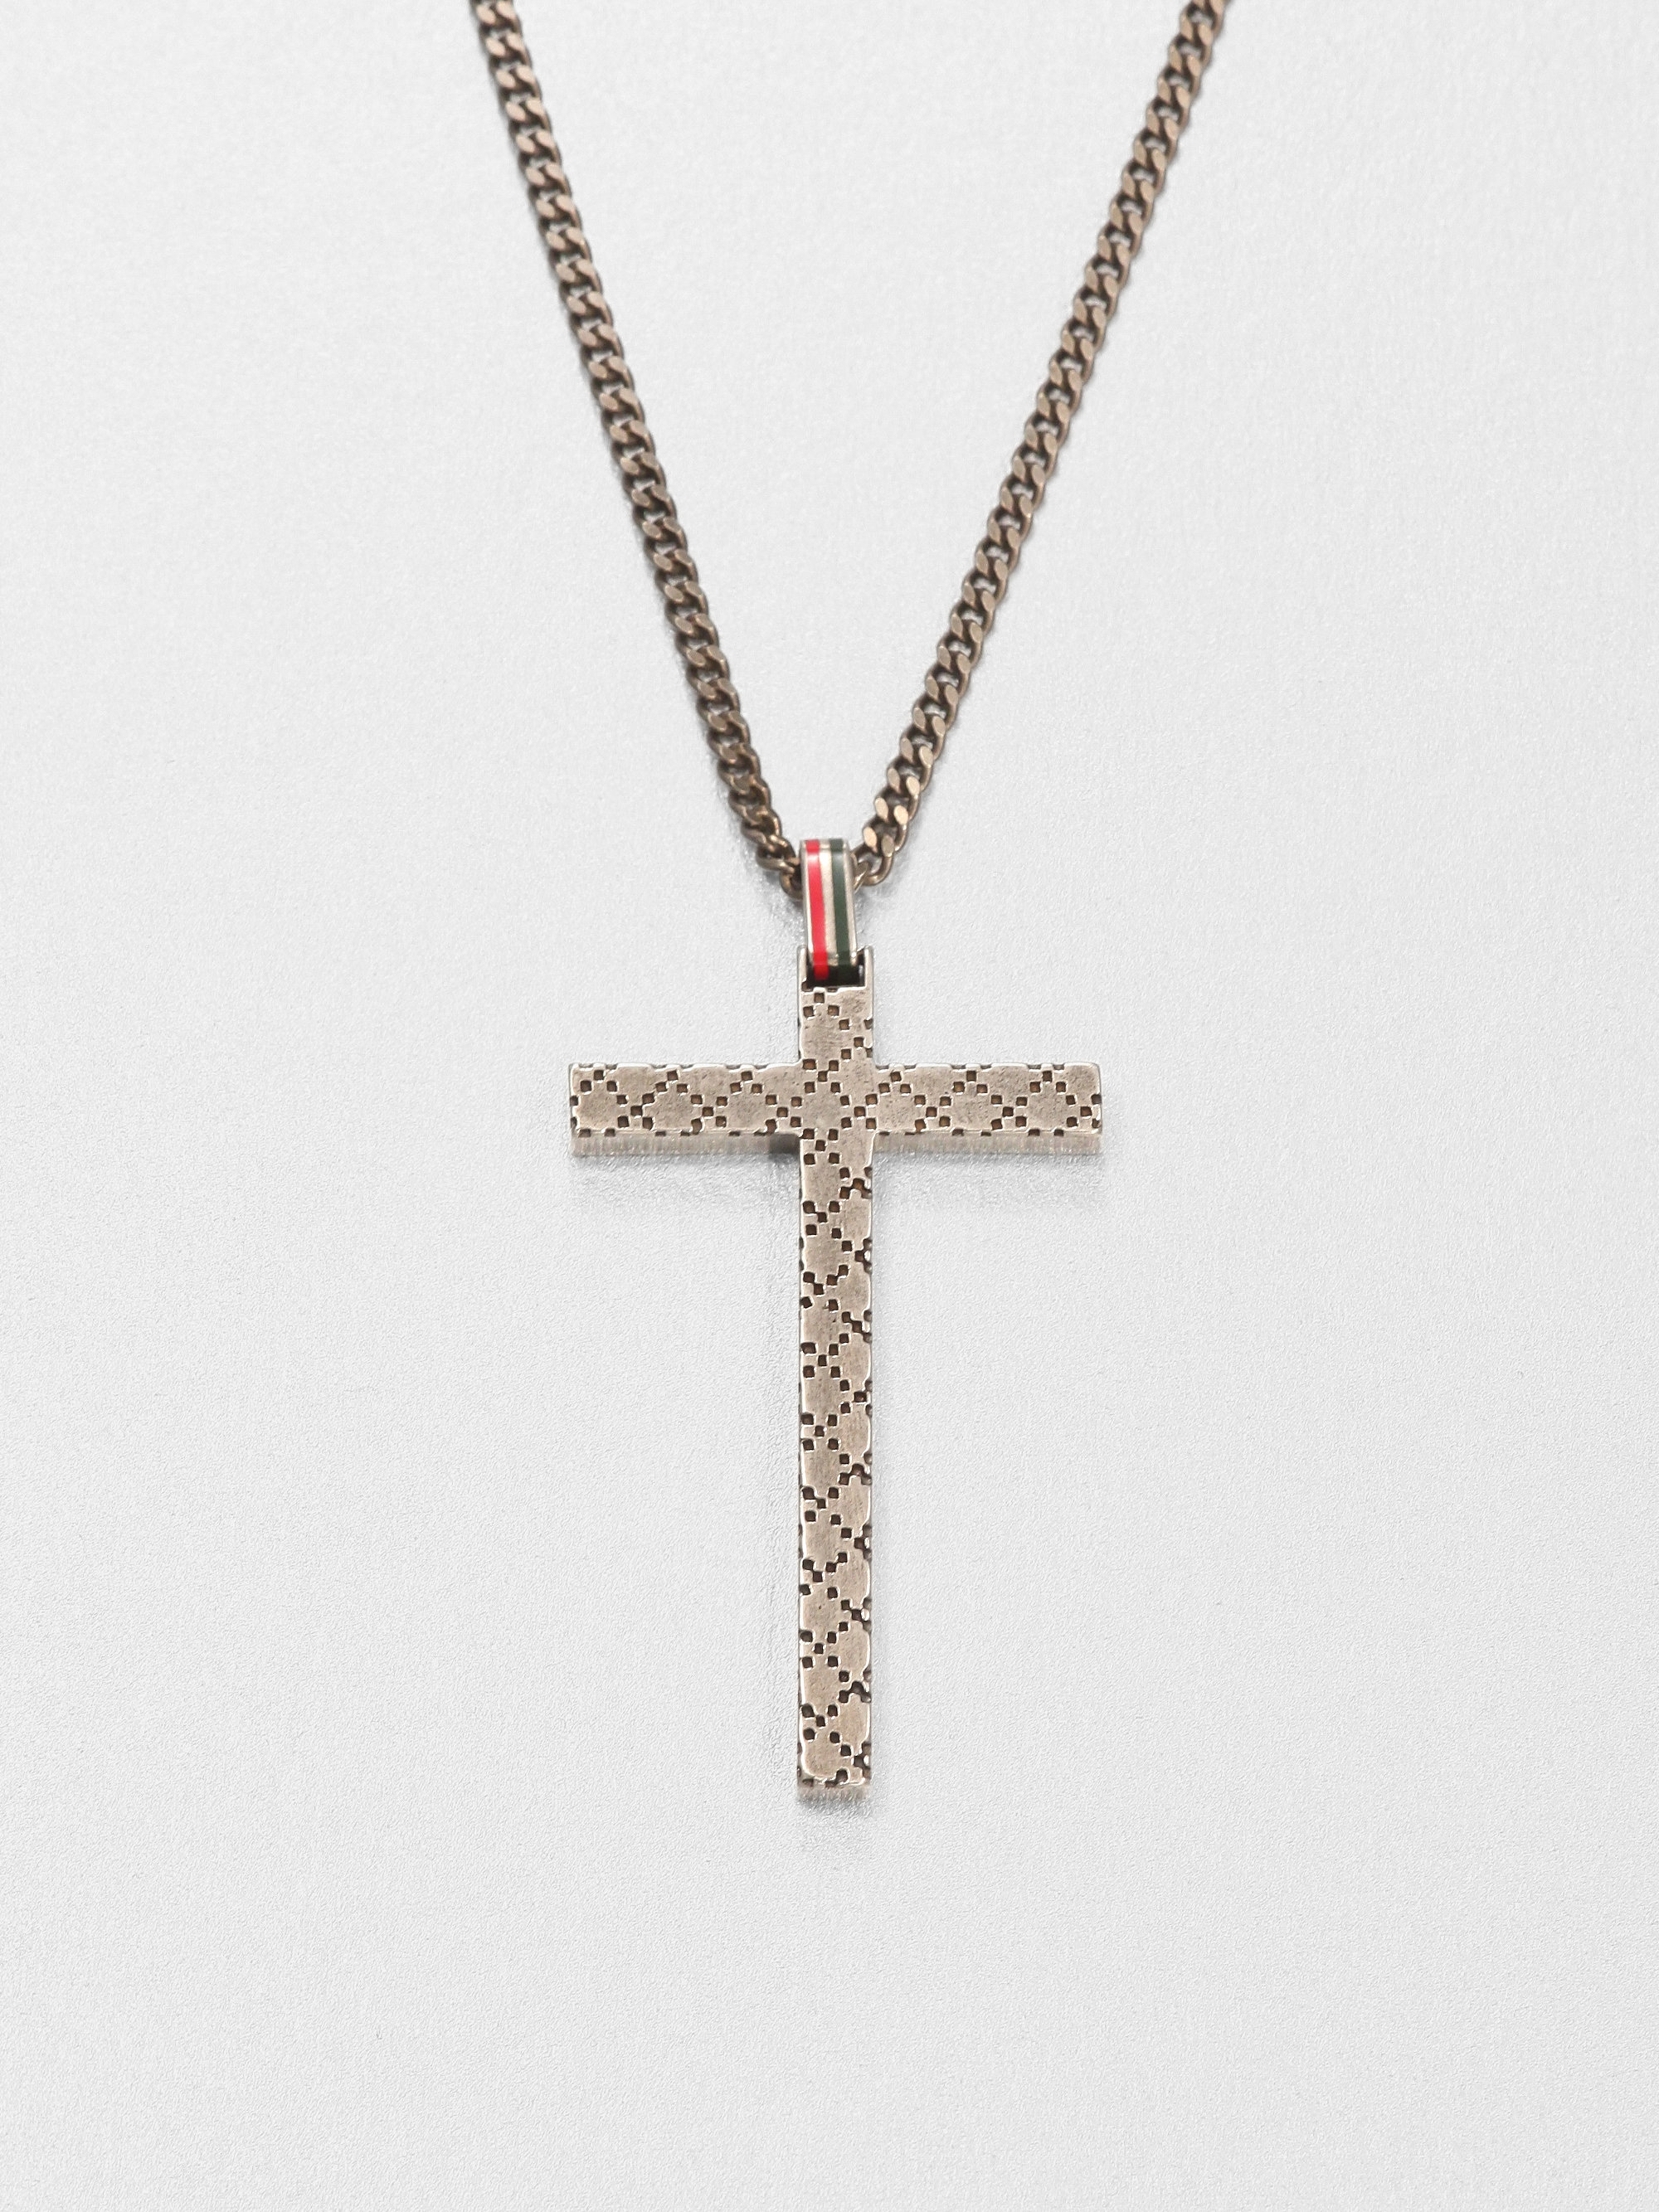 gucci silver cross necklace